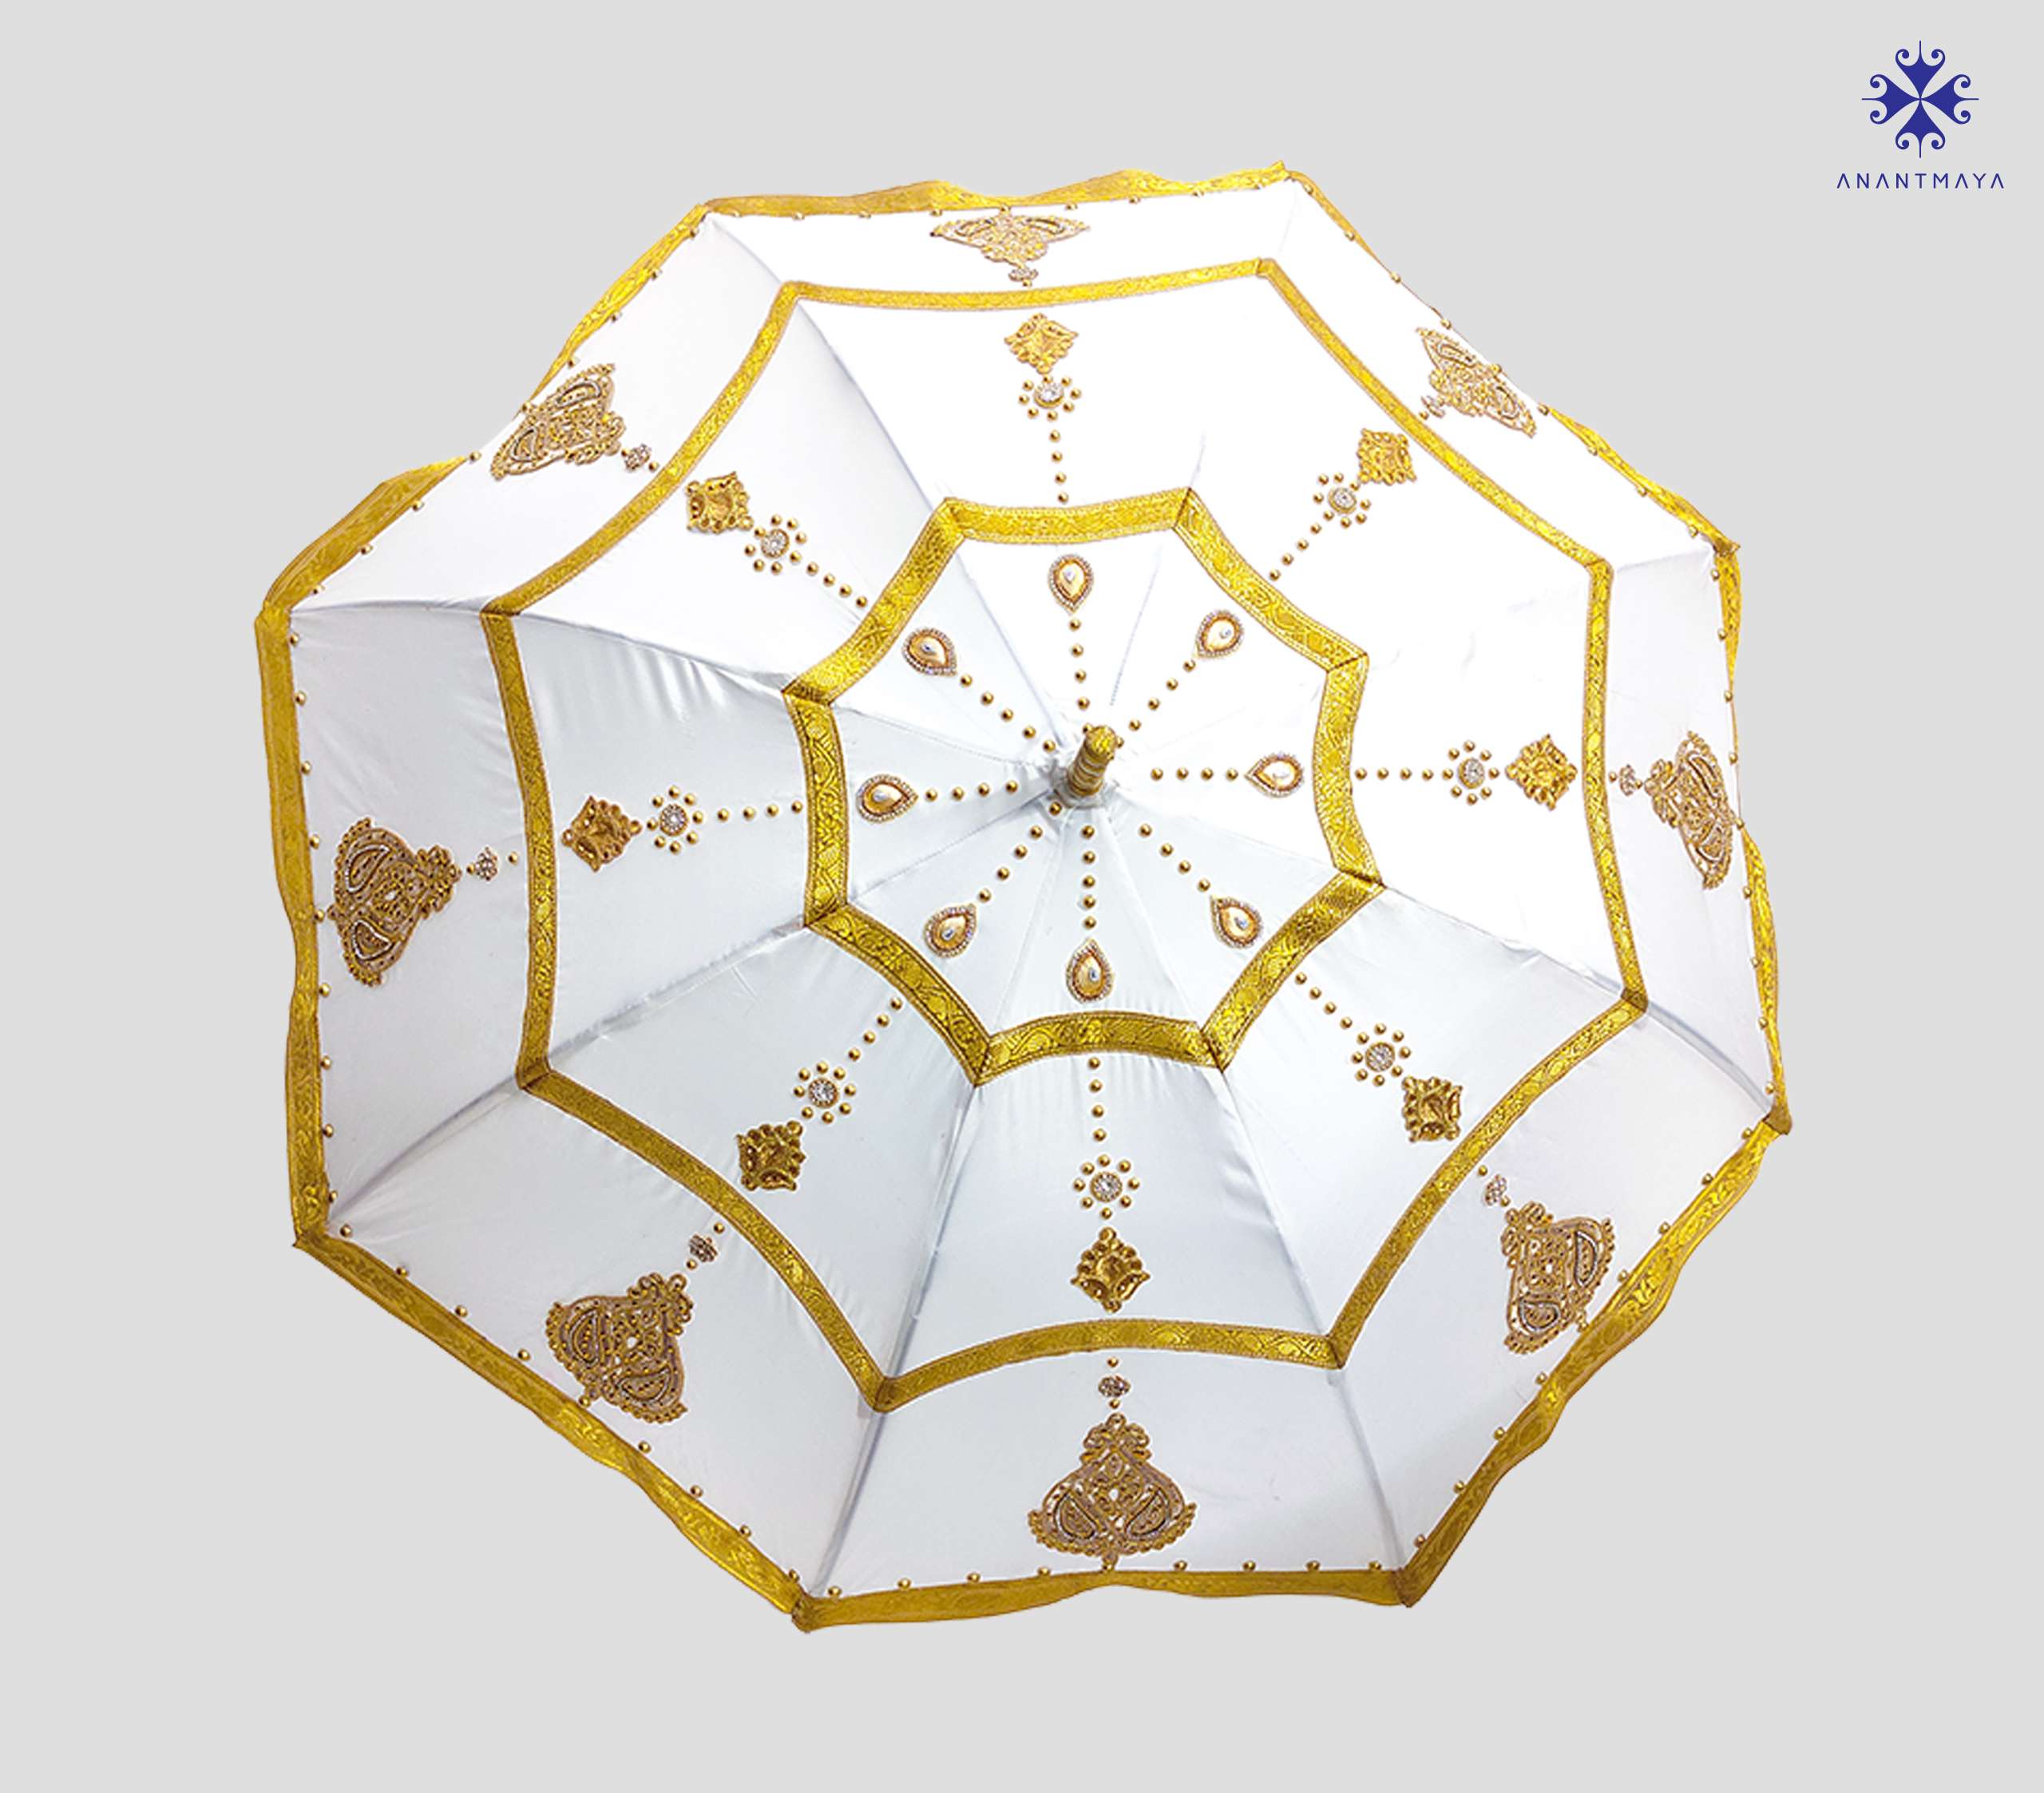 bridal-white-wedding-umbrella